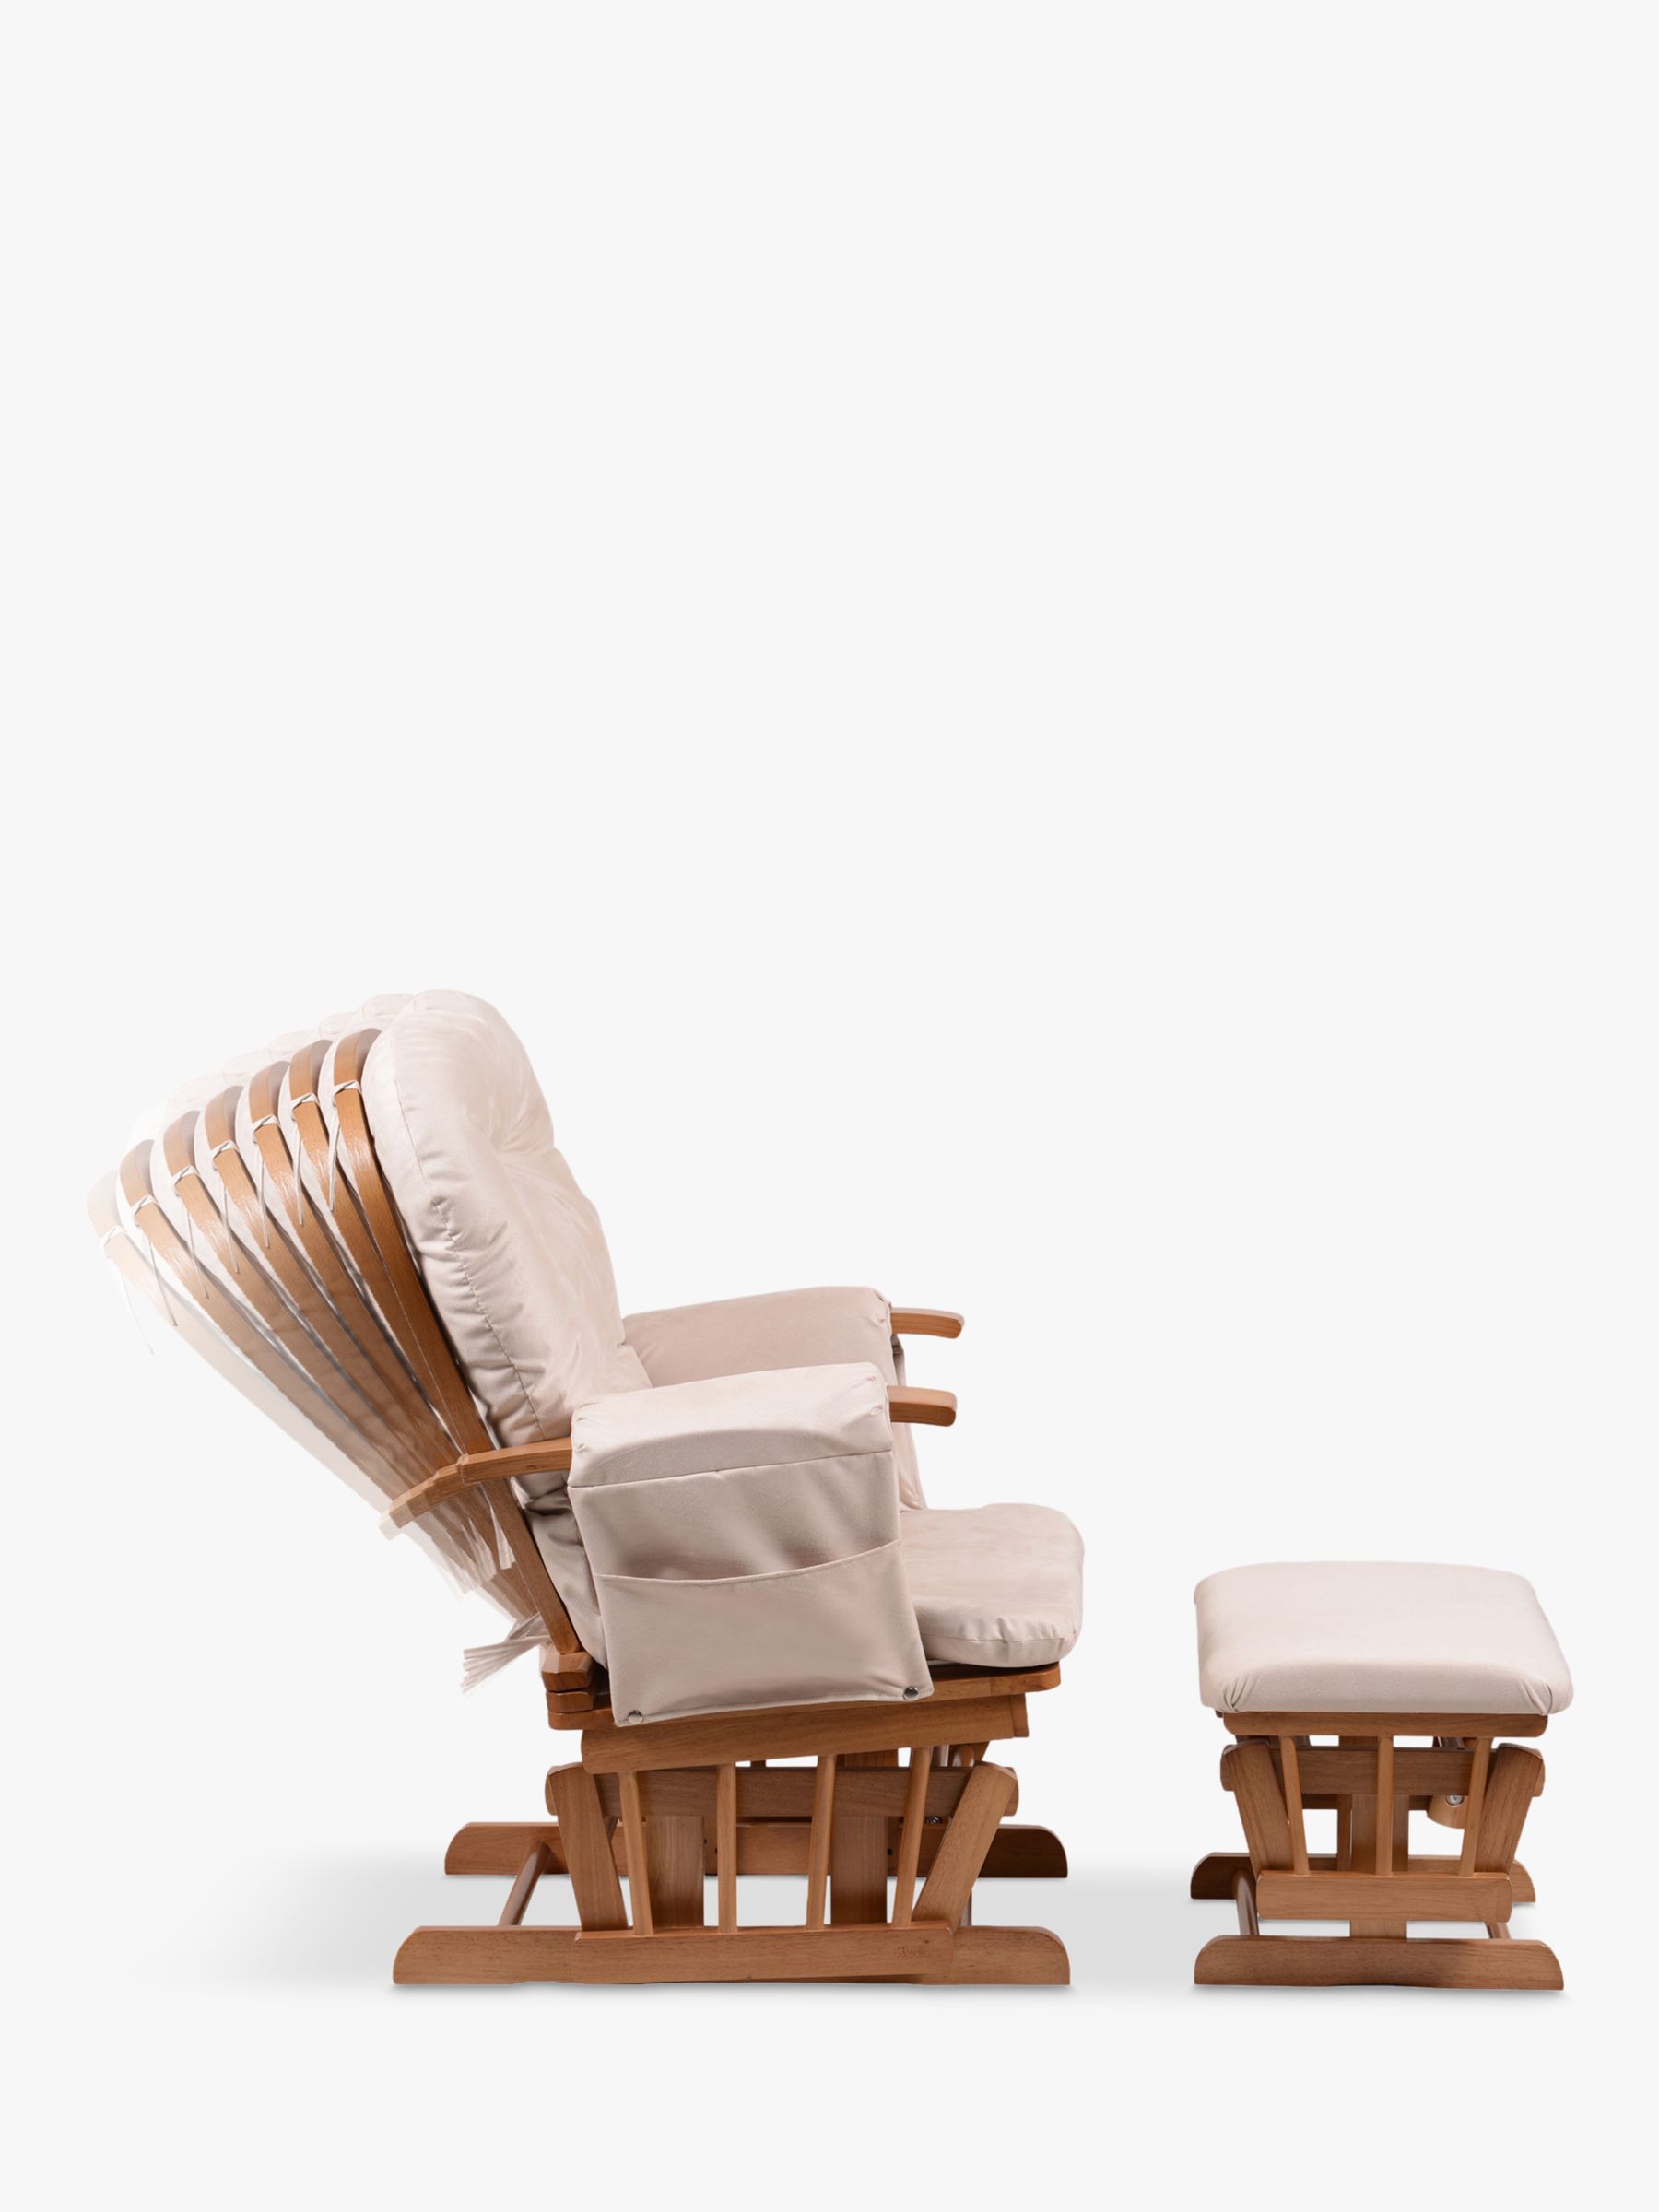 kub haywood reclining glider nursing chair and footstool